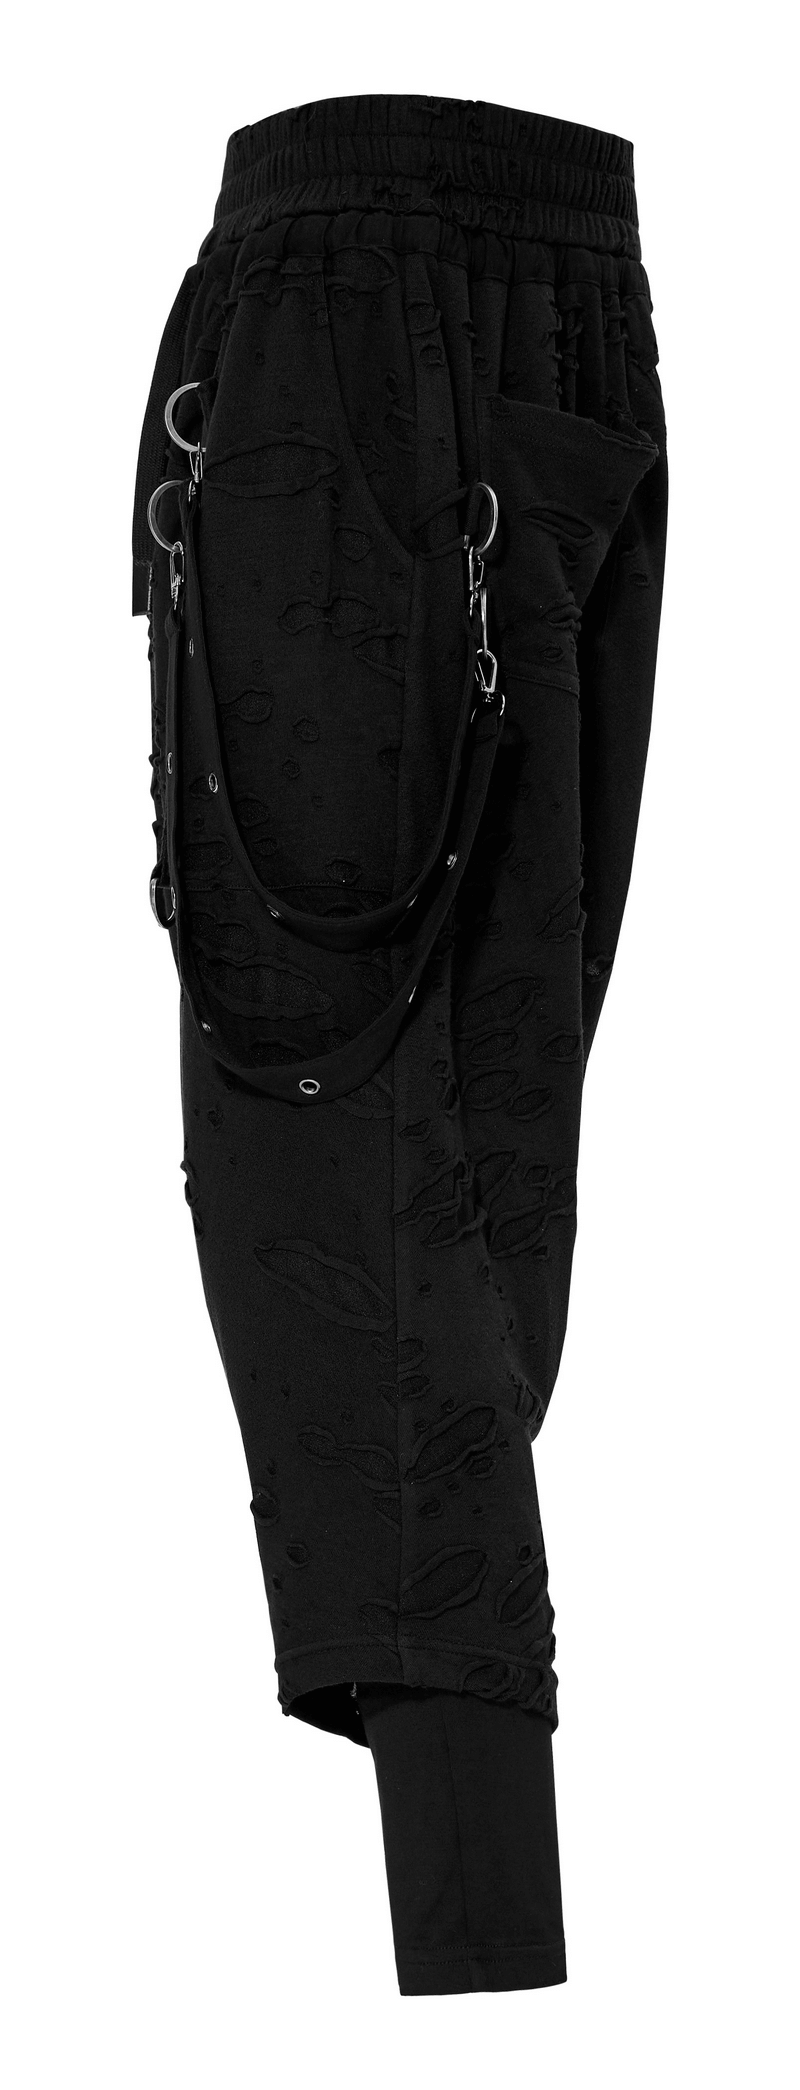 Gothic Harajuku Black Pants with Detachable Loops - HARD'N'HEAVY